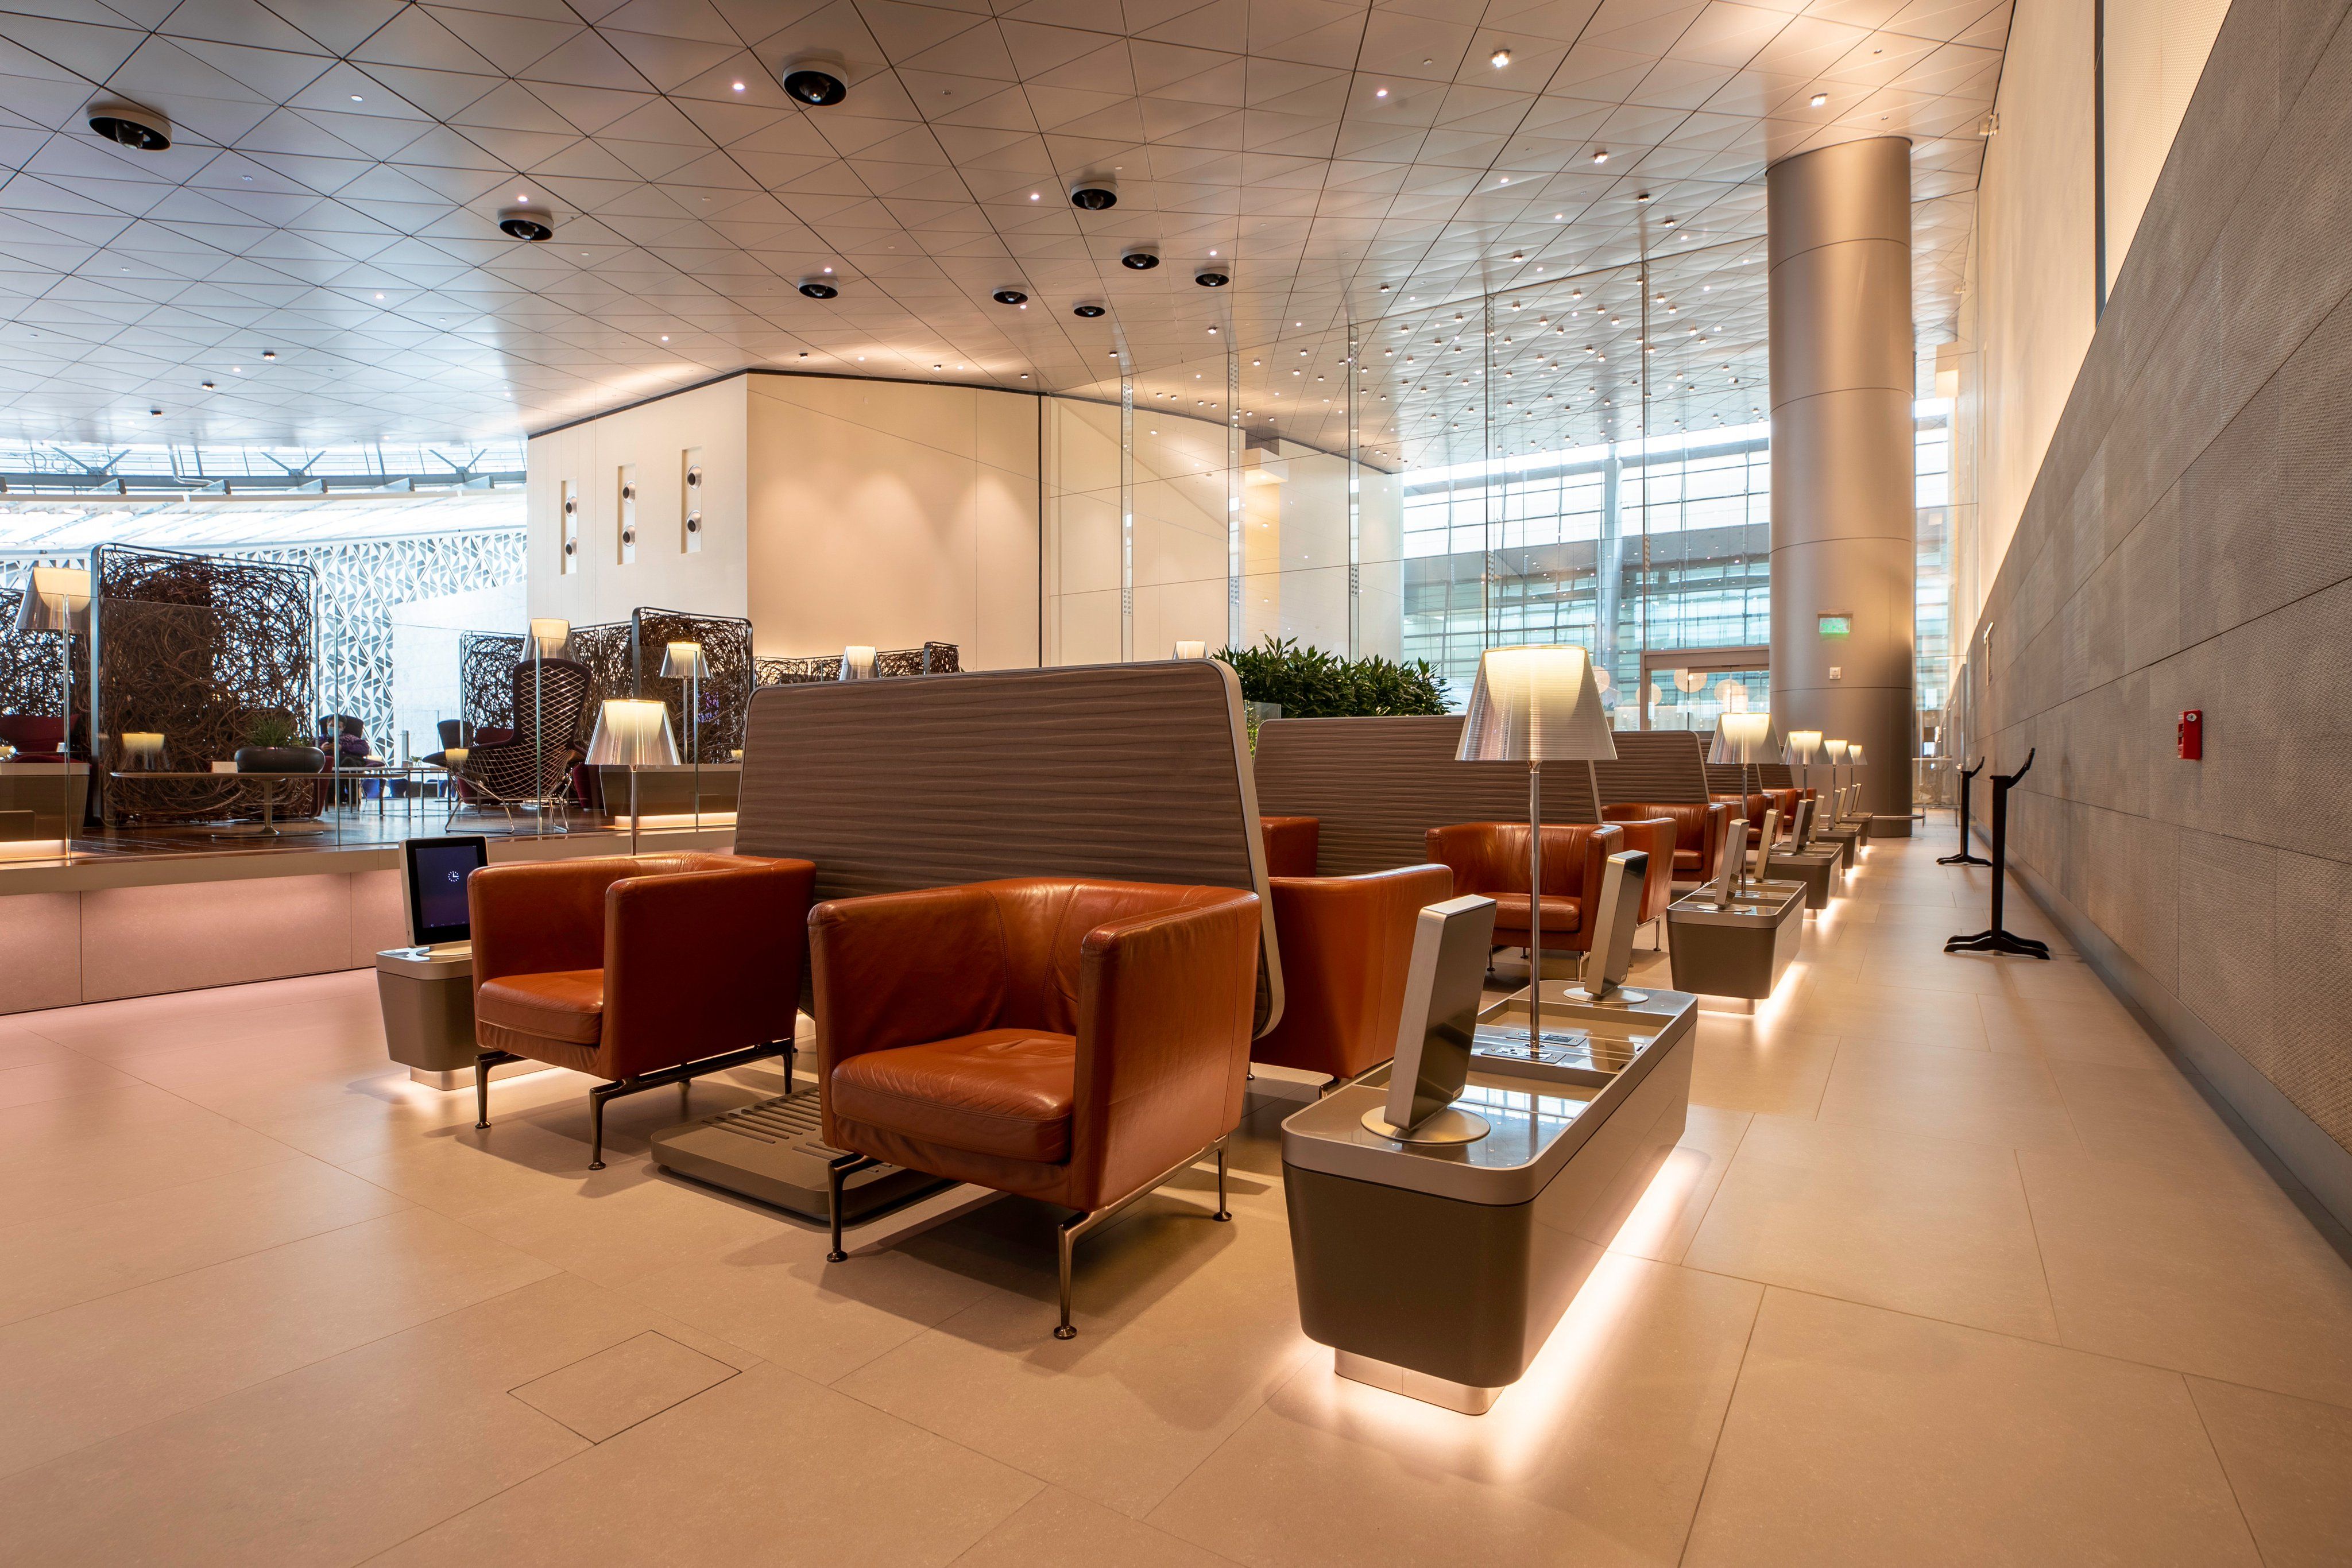 Qatar Airways' Al Mourjan Business Lounge